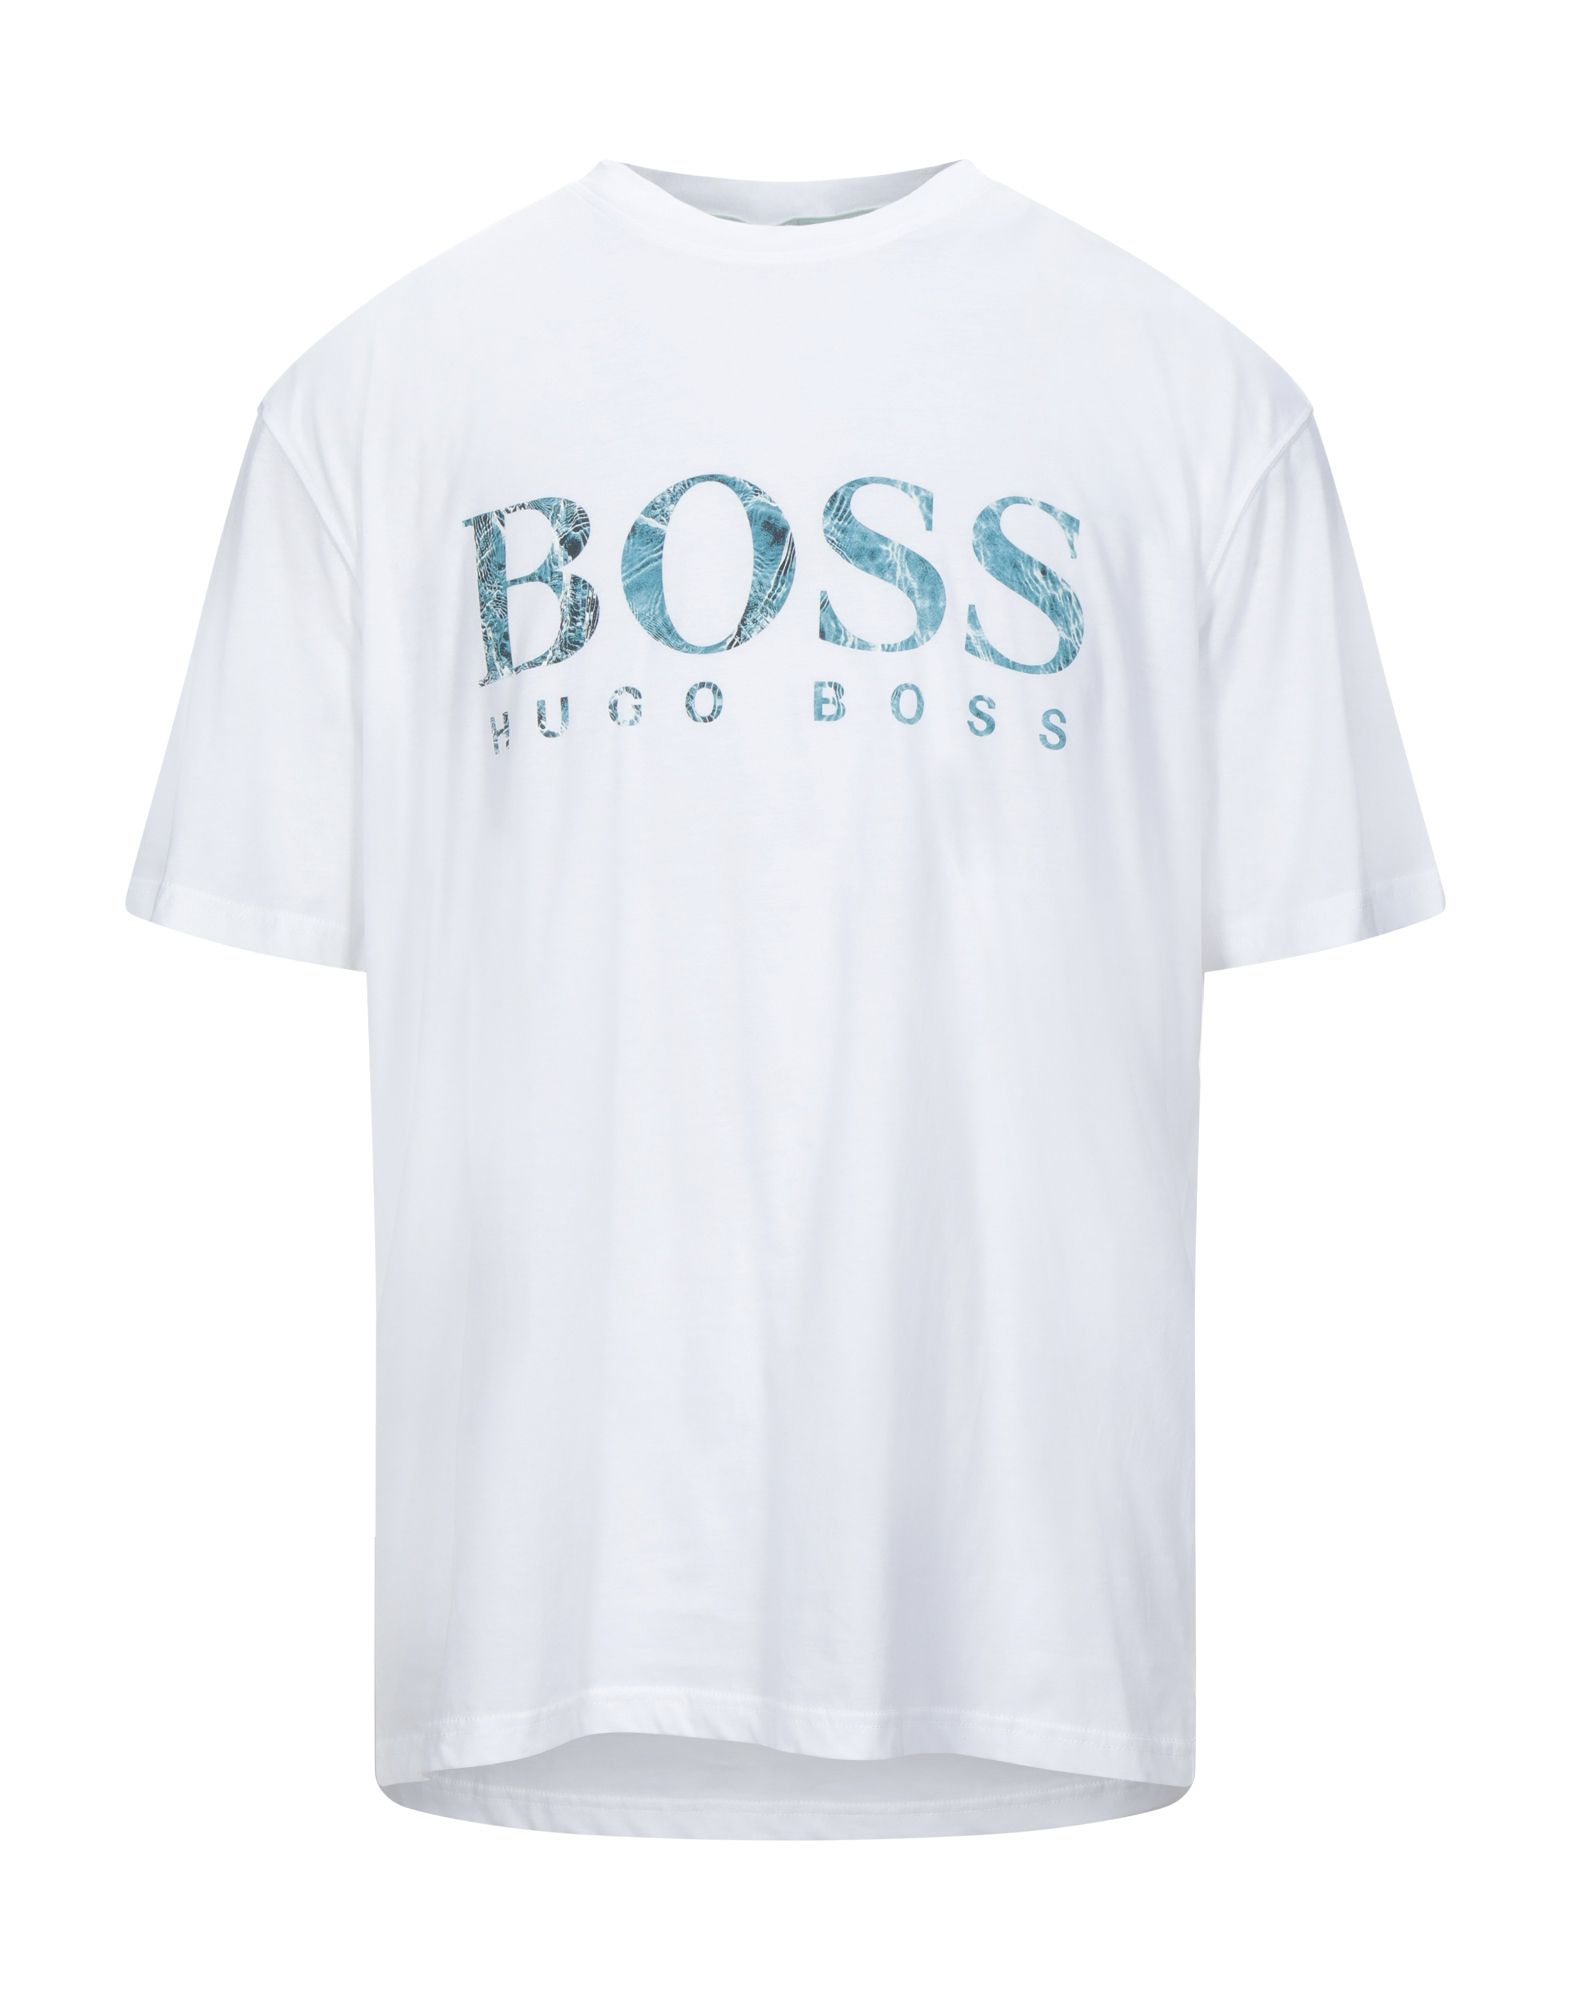 BOSS HUGO BOSS T-shirts - Item 12496635